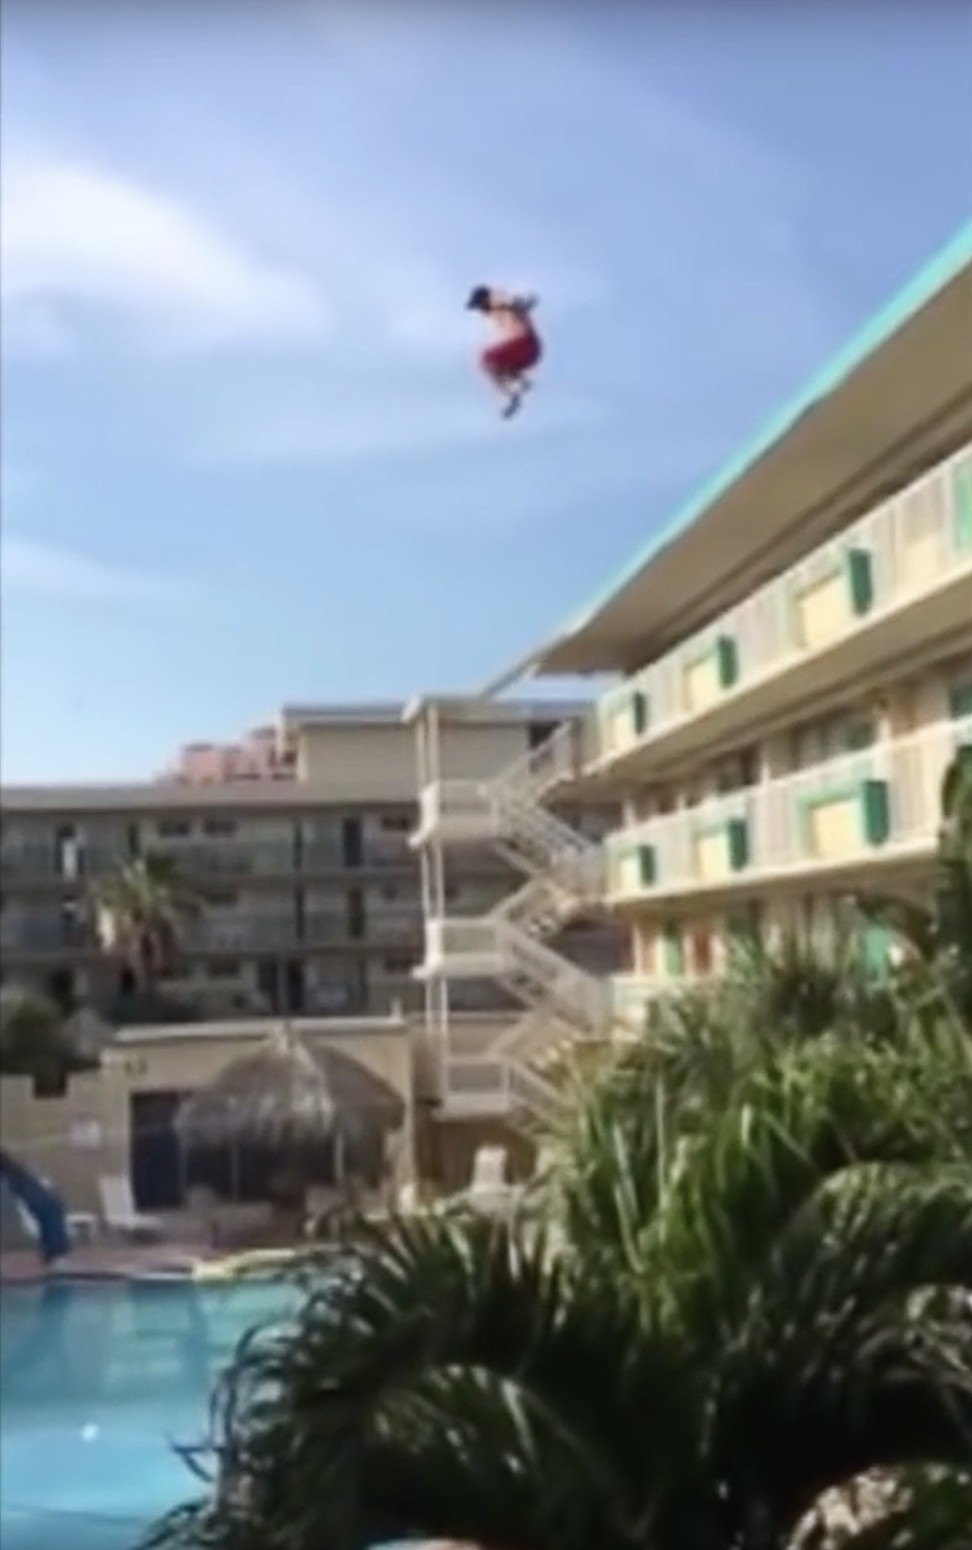 A YouTube screen grab shows a man “balconing”.